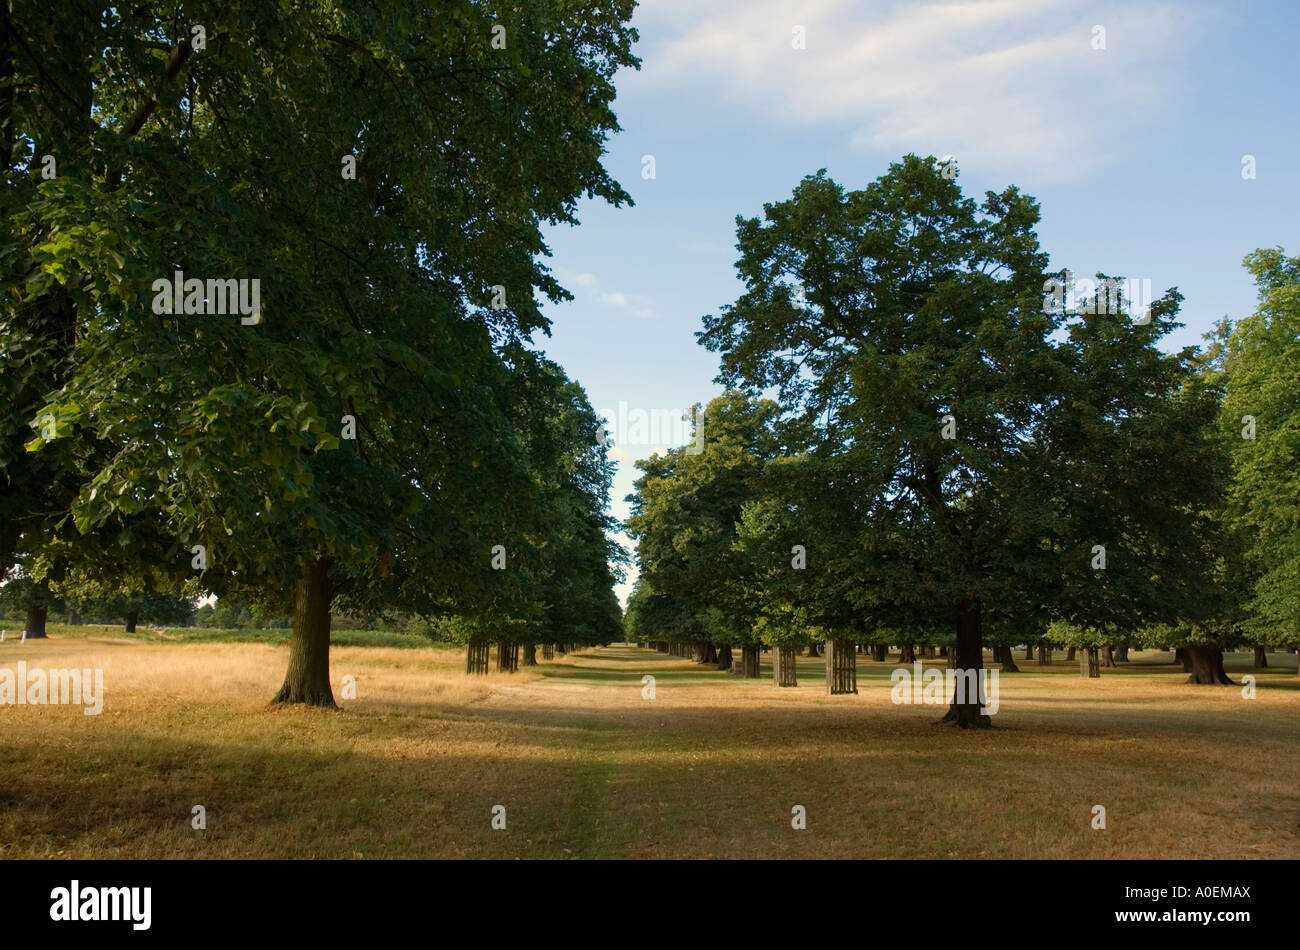 Chestnut trees in London park Stock Photo - Alamy